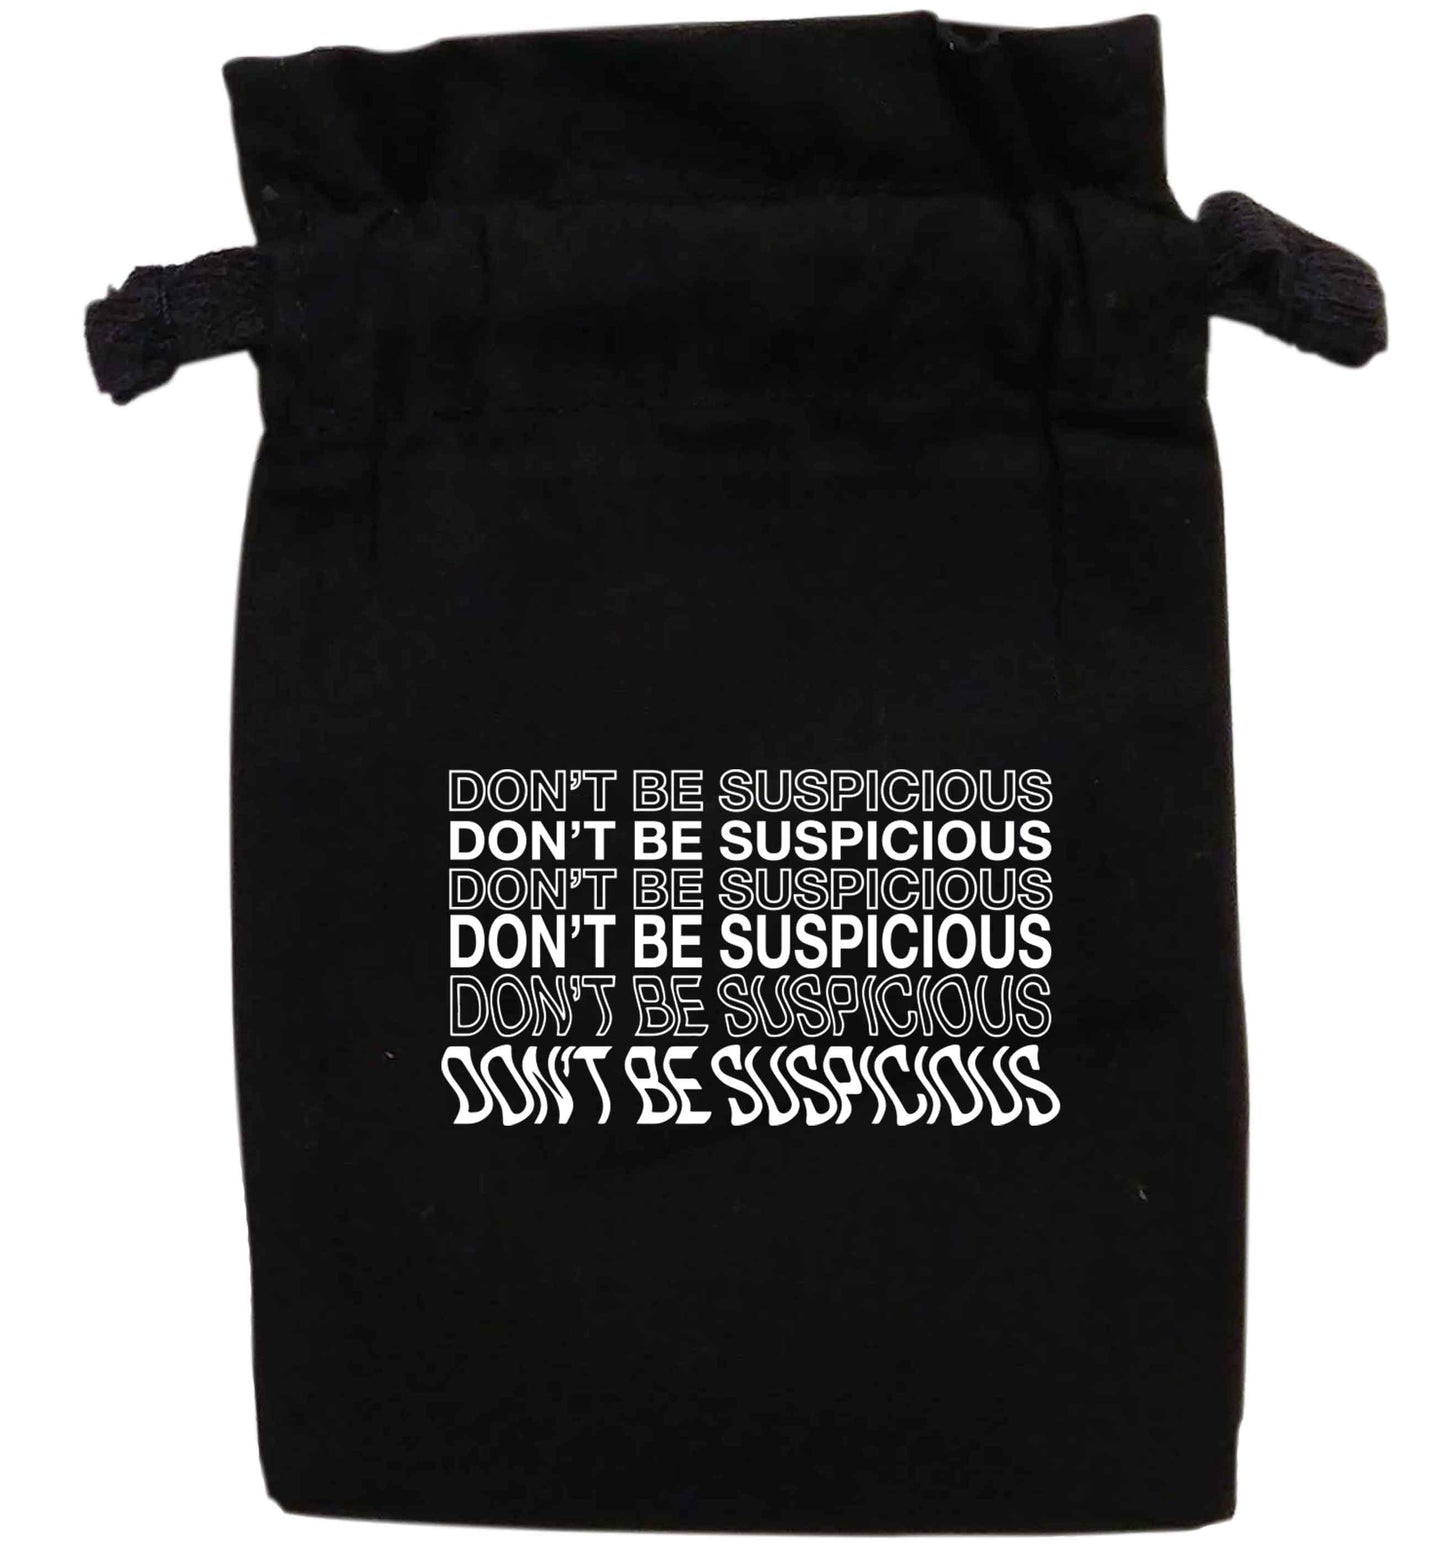 Don't be suspicious - 1 | XS - L | Pouch / Drawstring bag / Sack | Organic Cotton | Bulk discounts available!